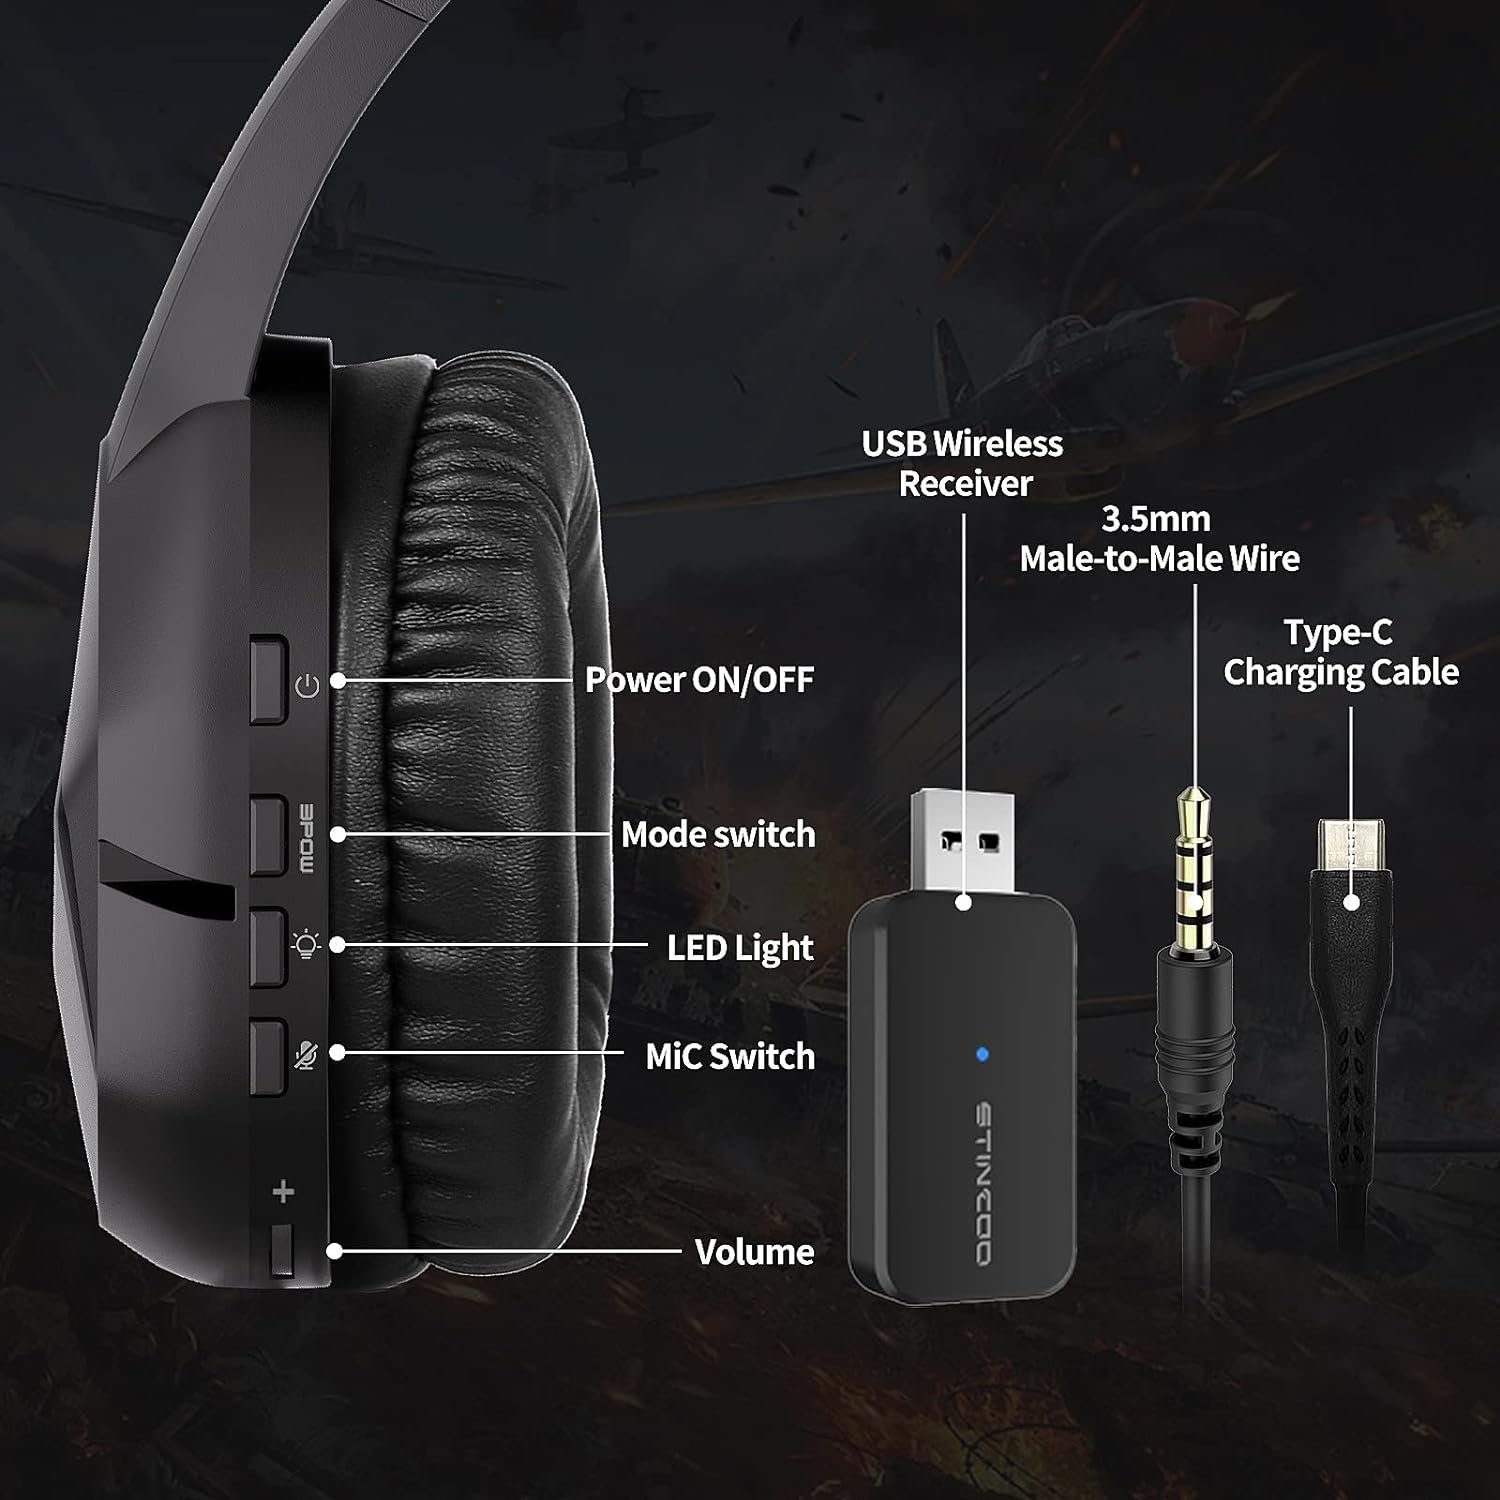 LED-Beleuchtung. PC) & GS401 Gaming-Headset PS4, (Abnehmbares Flexibel PS5 Gaming-Headset: 2.4G/Bluetooth Kabelloses Mikrofon einsetzbar. Klangqualität und hoher mit , Somic für